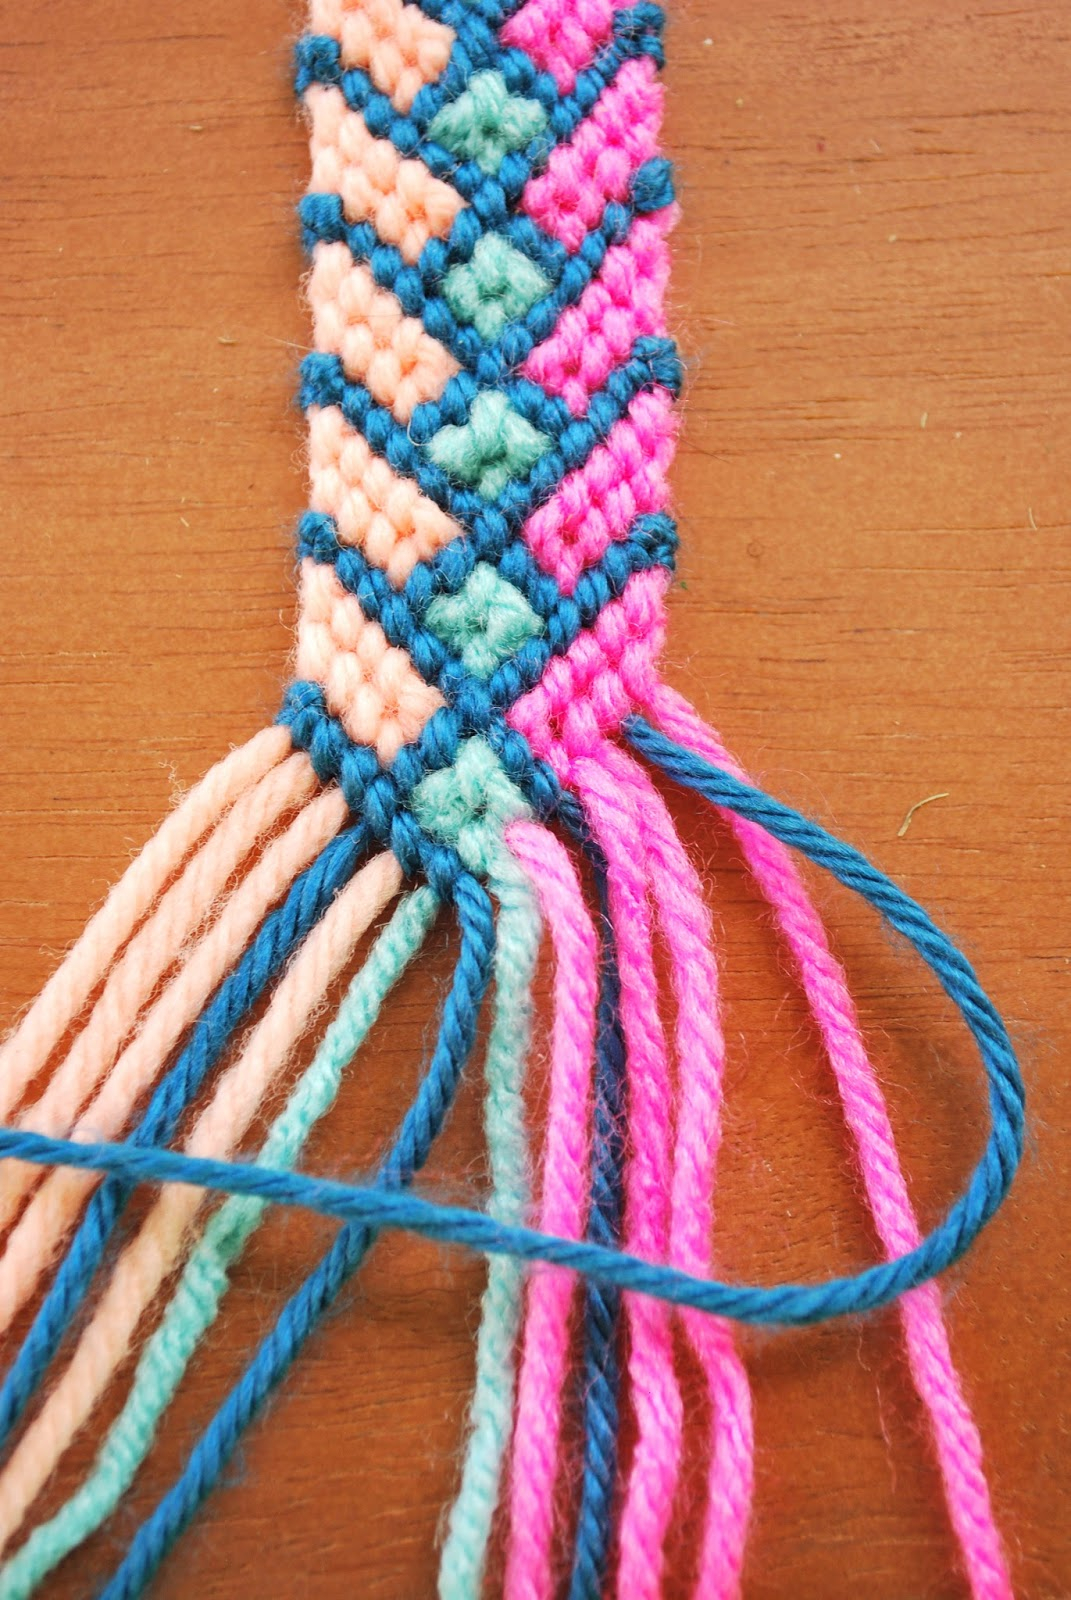 Embroidery Floss Bracelets Patterns Diy The Crazy Complicated Friendship Bracelet